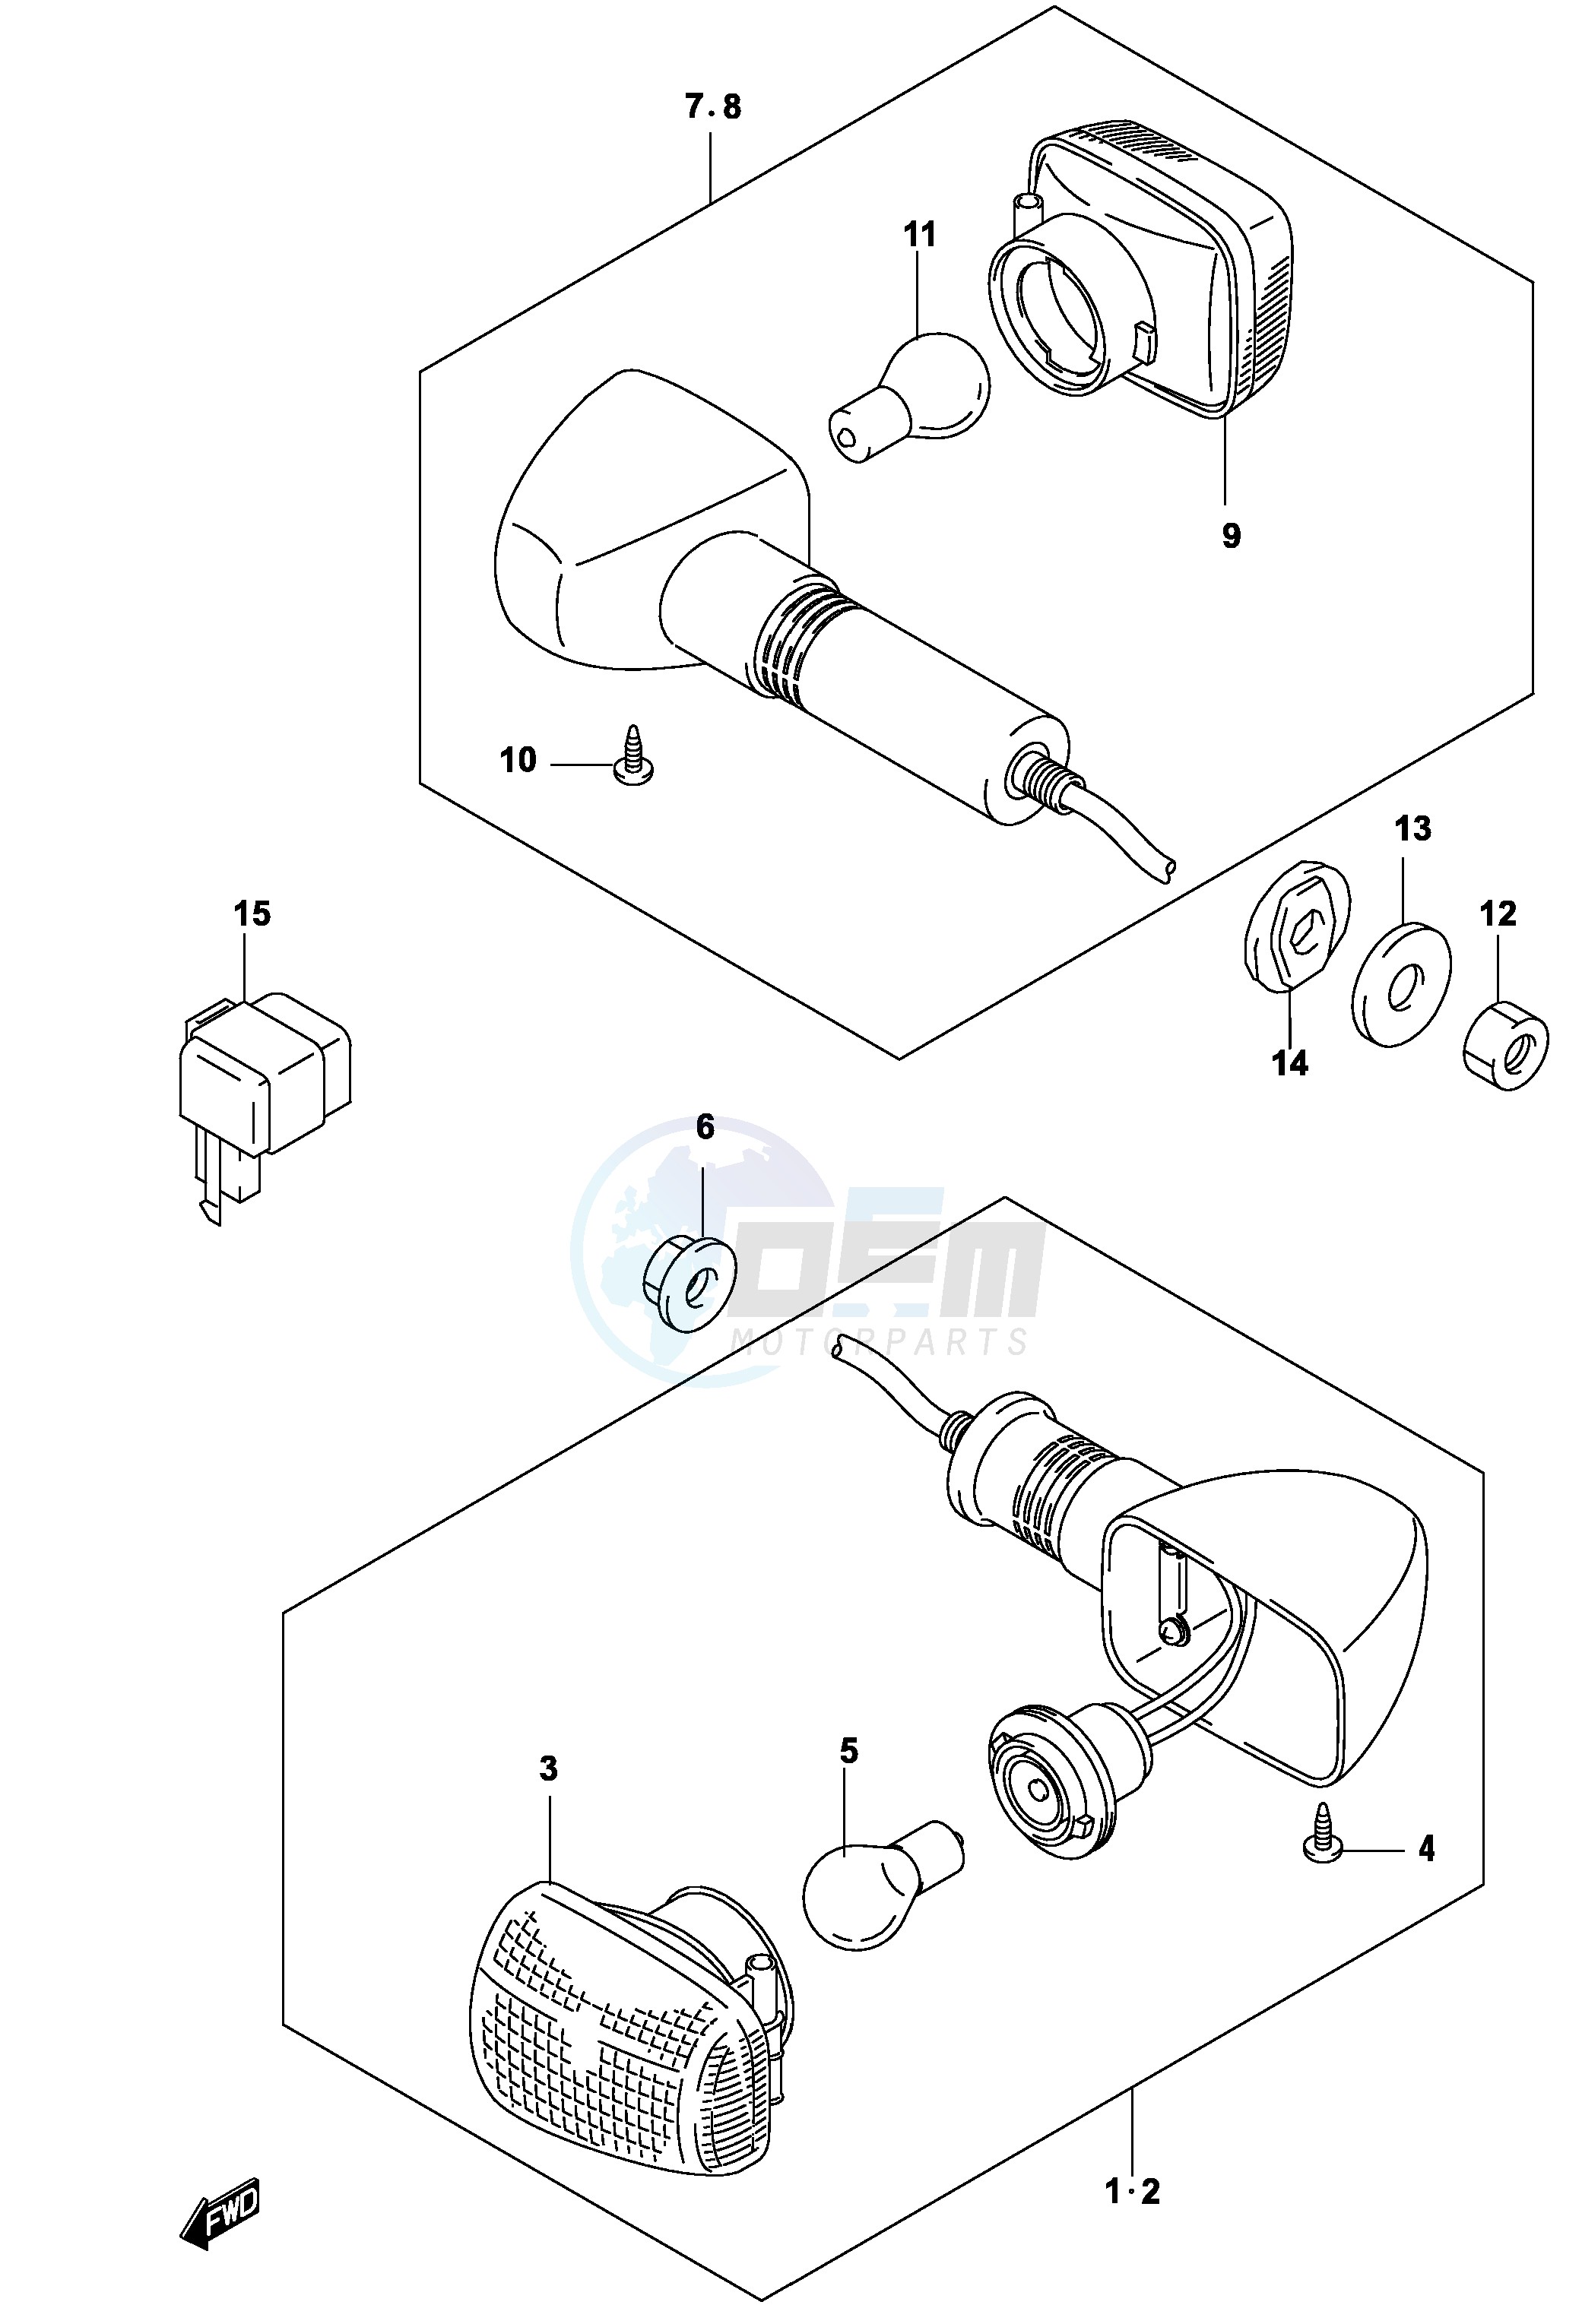 TURNSIGNAL LAMP (GS500K4 UK4) blueprint